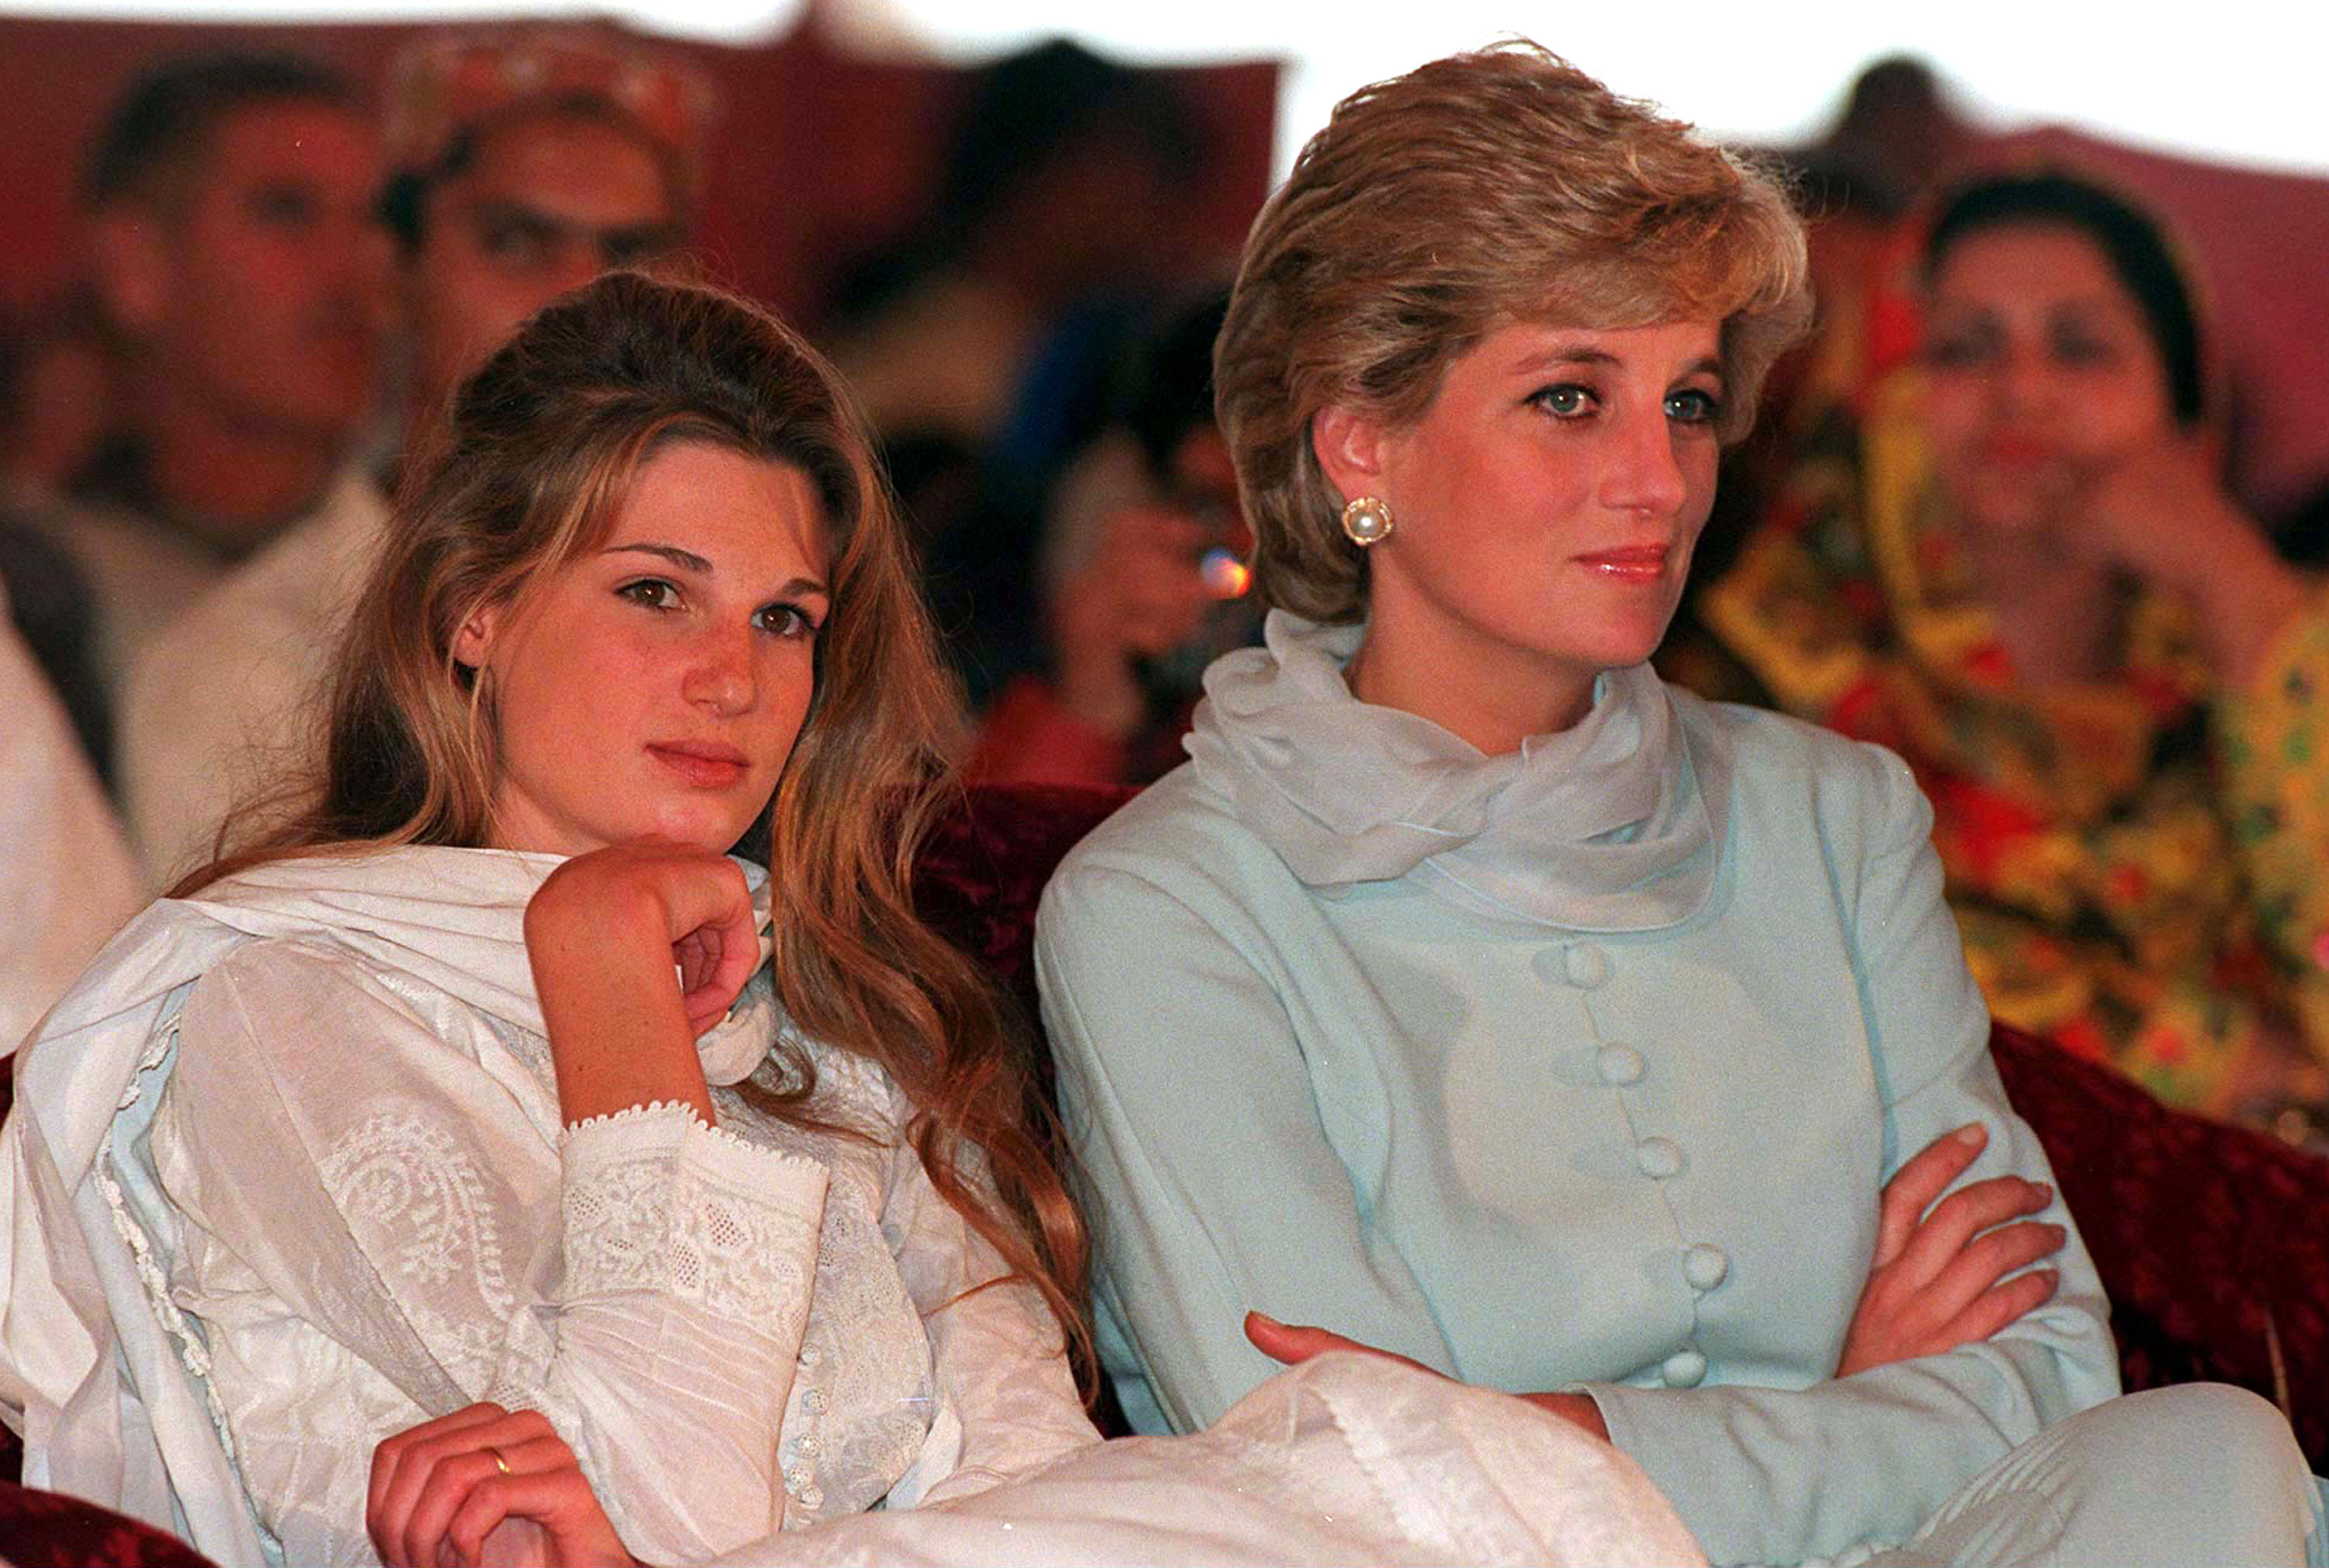 Princess Diana wearing a pale blue shalwar kameez while sitting next to her friend Jemima Khan